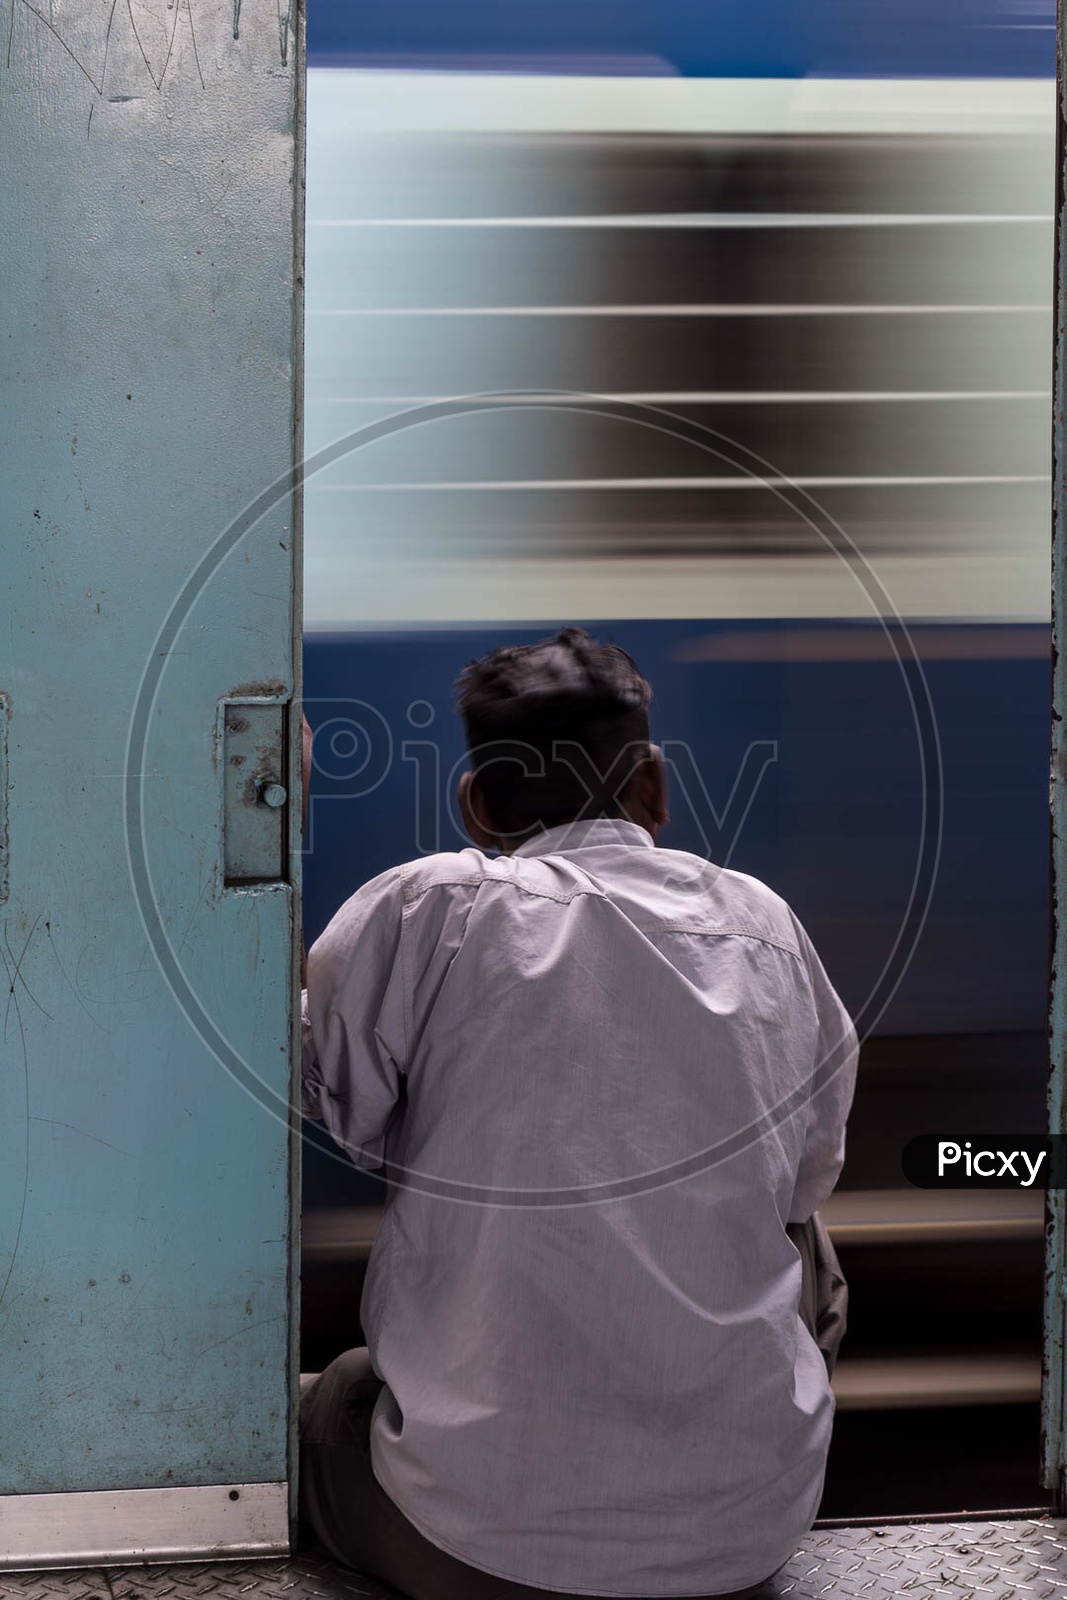 Man sitting at trains door